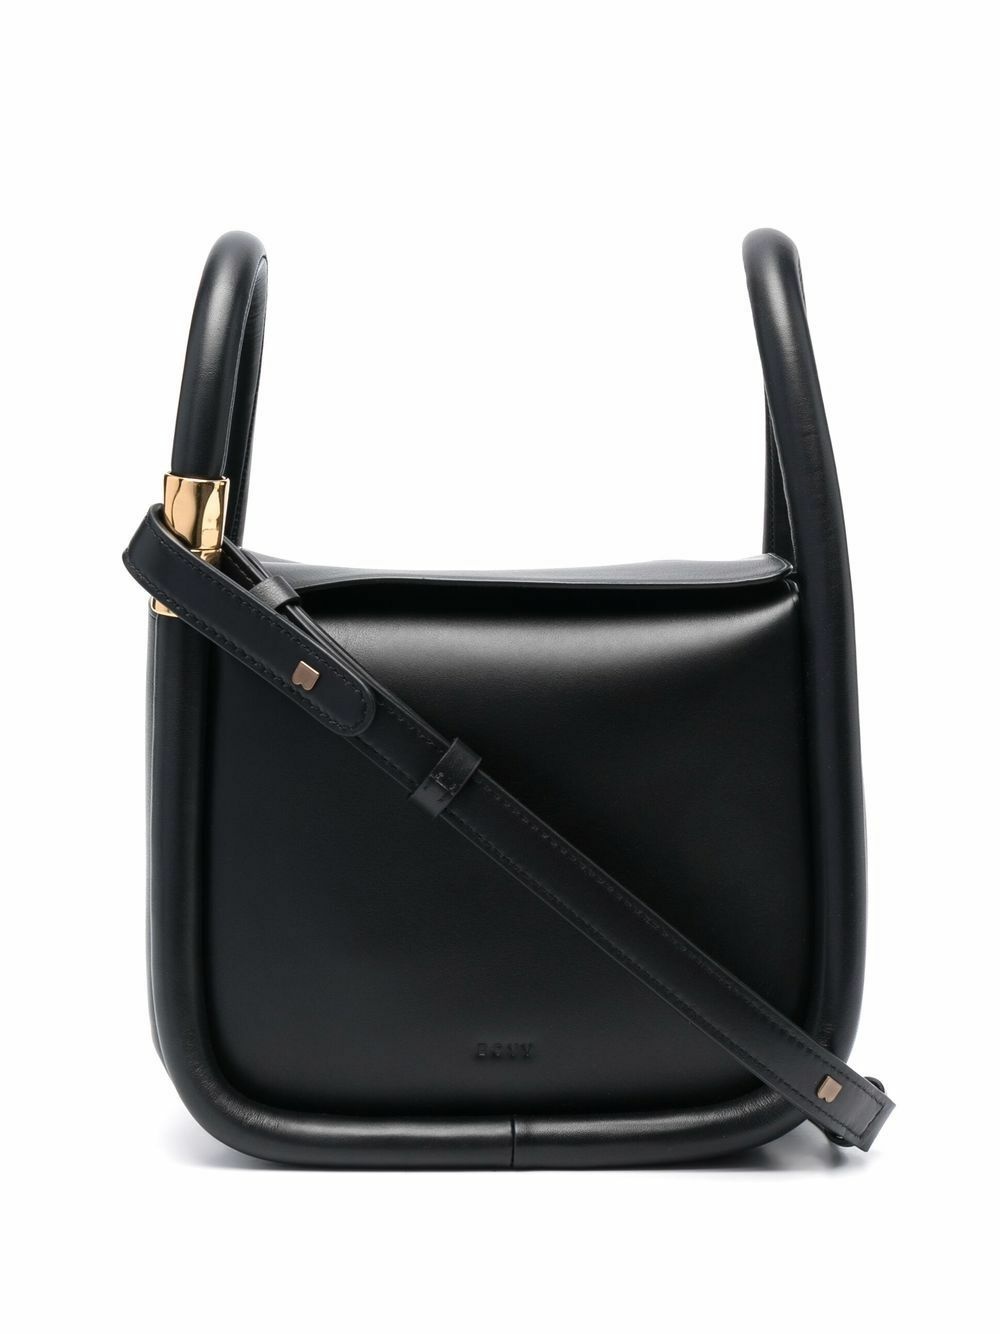 Photo: BOYY - Wonton 20 Leather Handbag